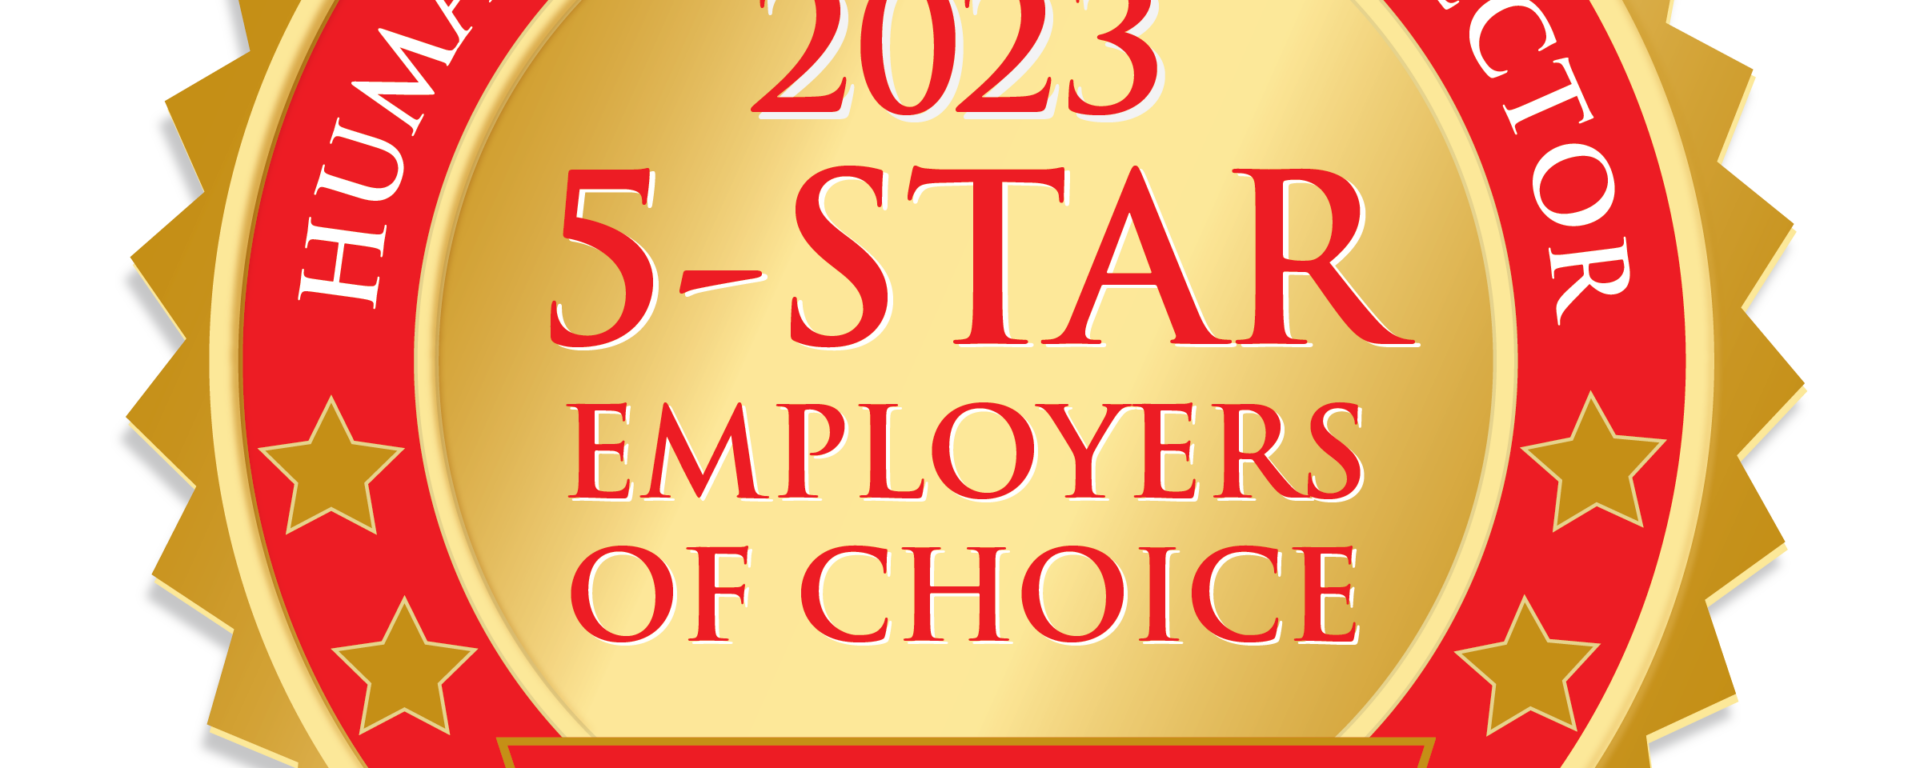 2023 HRD 5-Star Employers of Choice awards